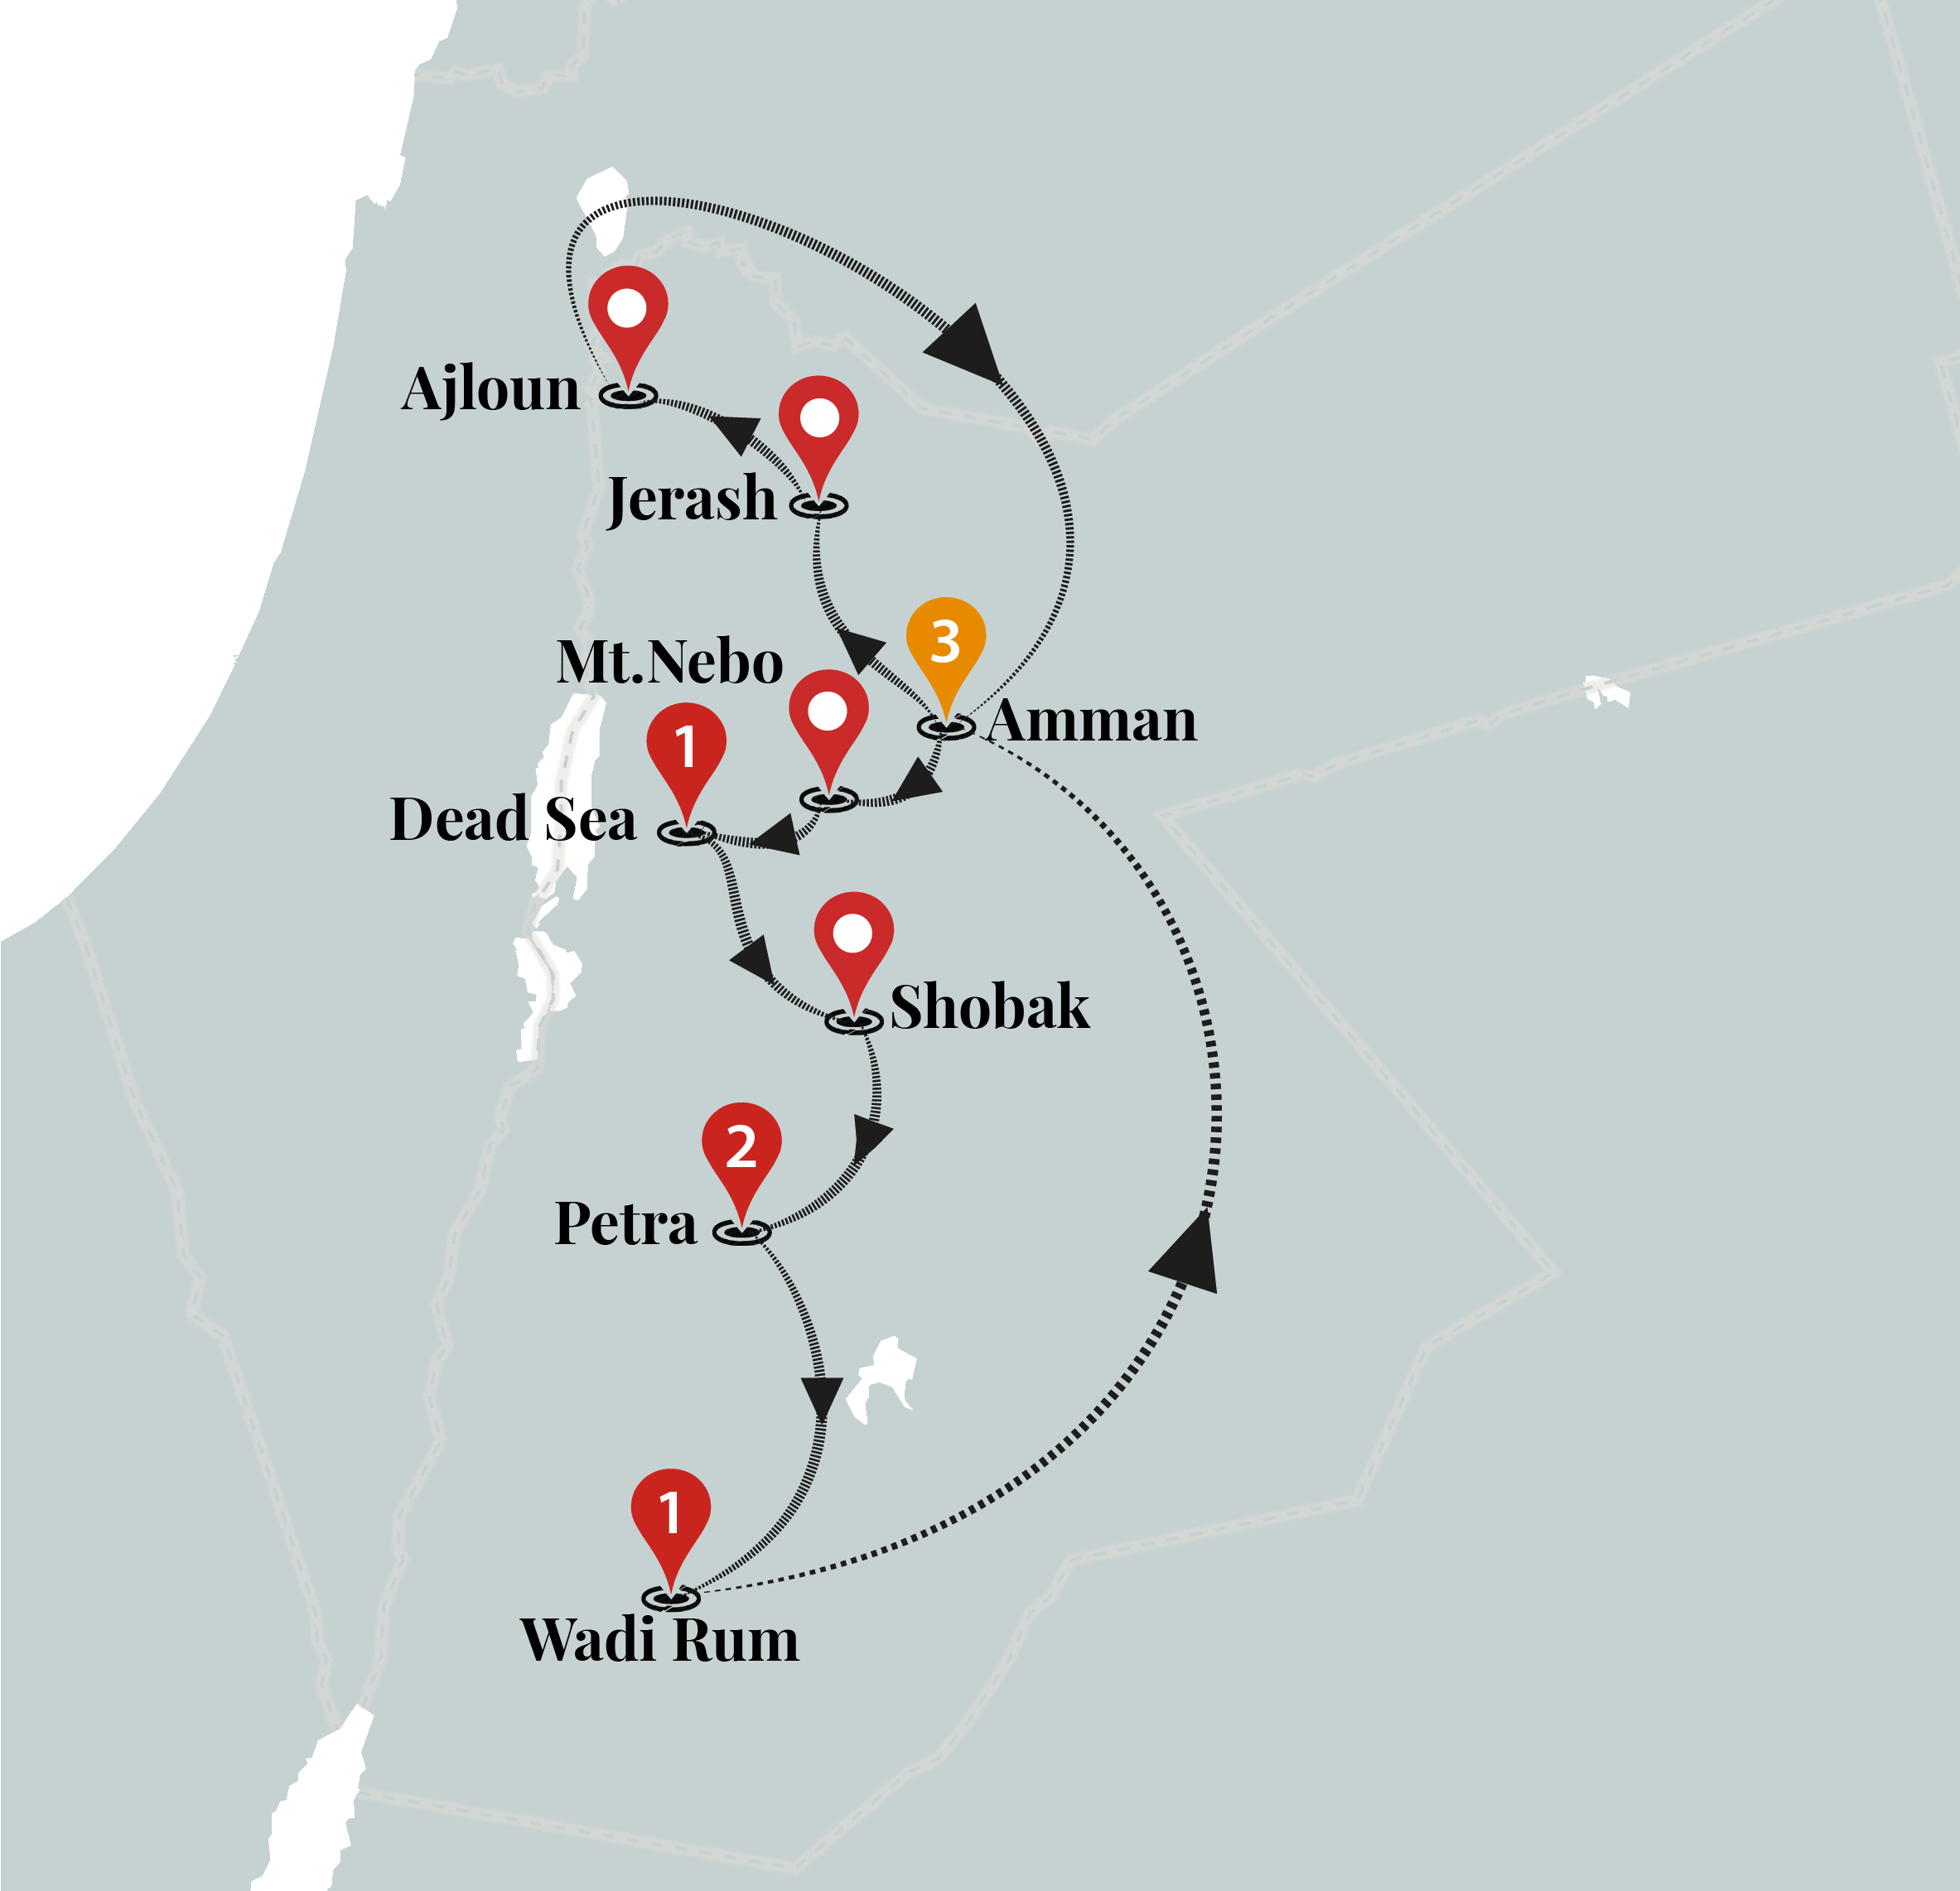 tourhub | Ciconia Exclusive Journeys | Best of Jordan Luxury Tour | Tour Map